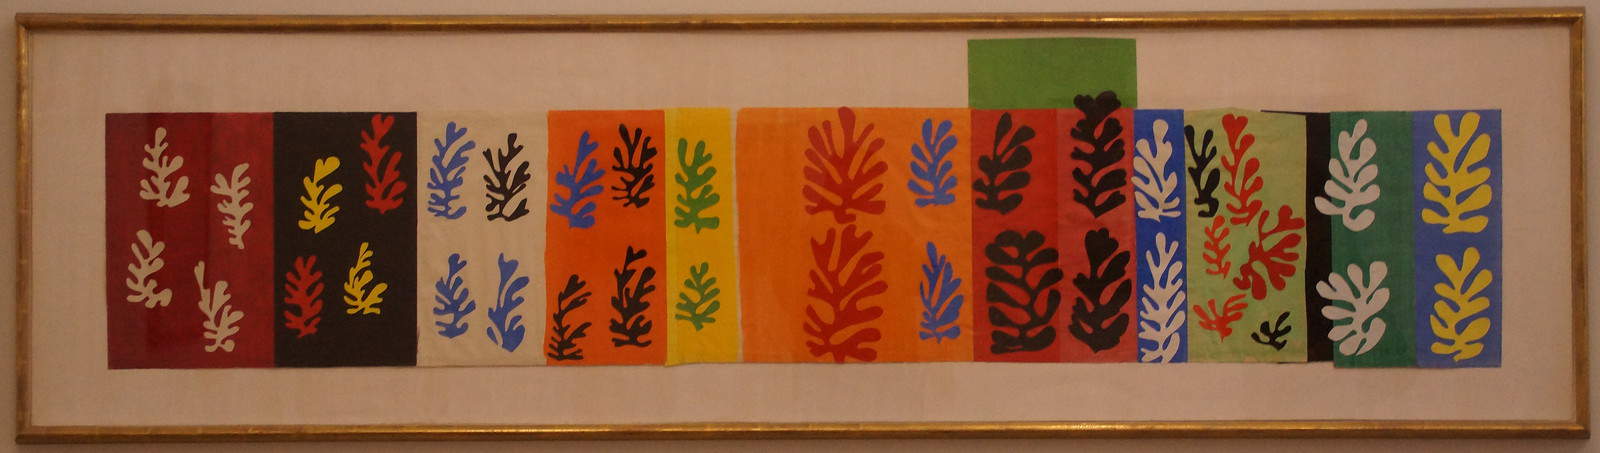 Matisse's Art and Textiles